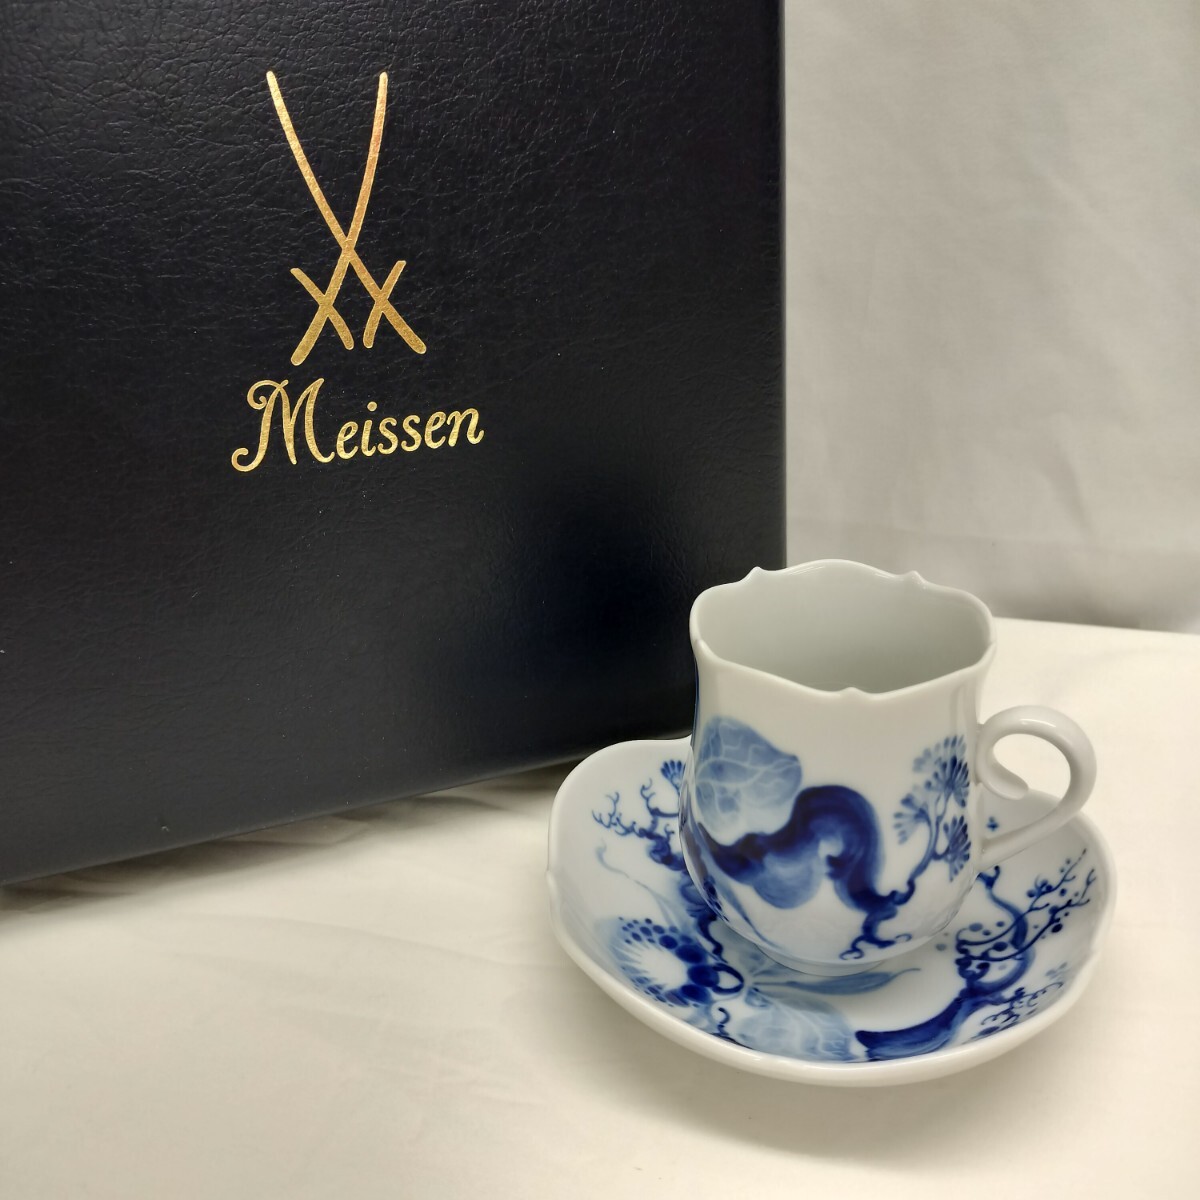 【A-150】Meissen/マイセン ブルーオーキッド カップ&ソーサー 1客/ブランド食器/小皿/コップ/受け皿/箱付きの画像1